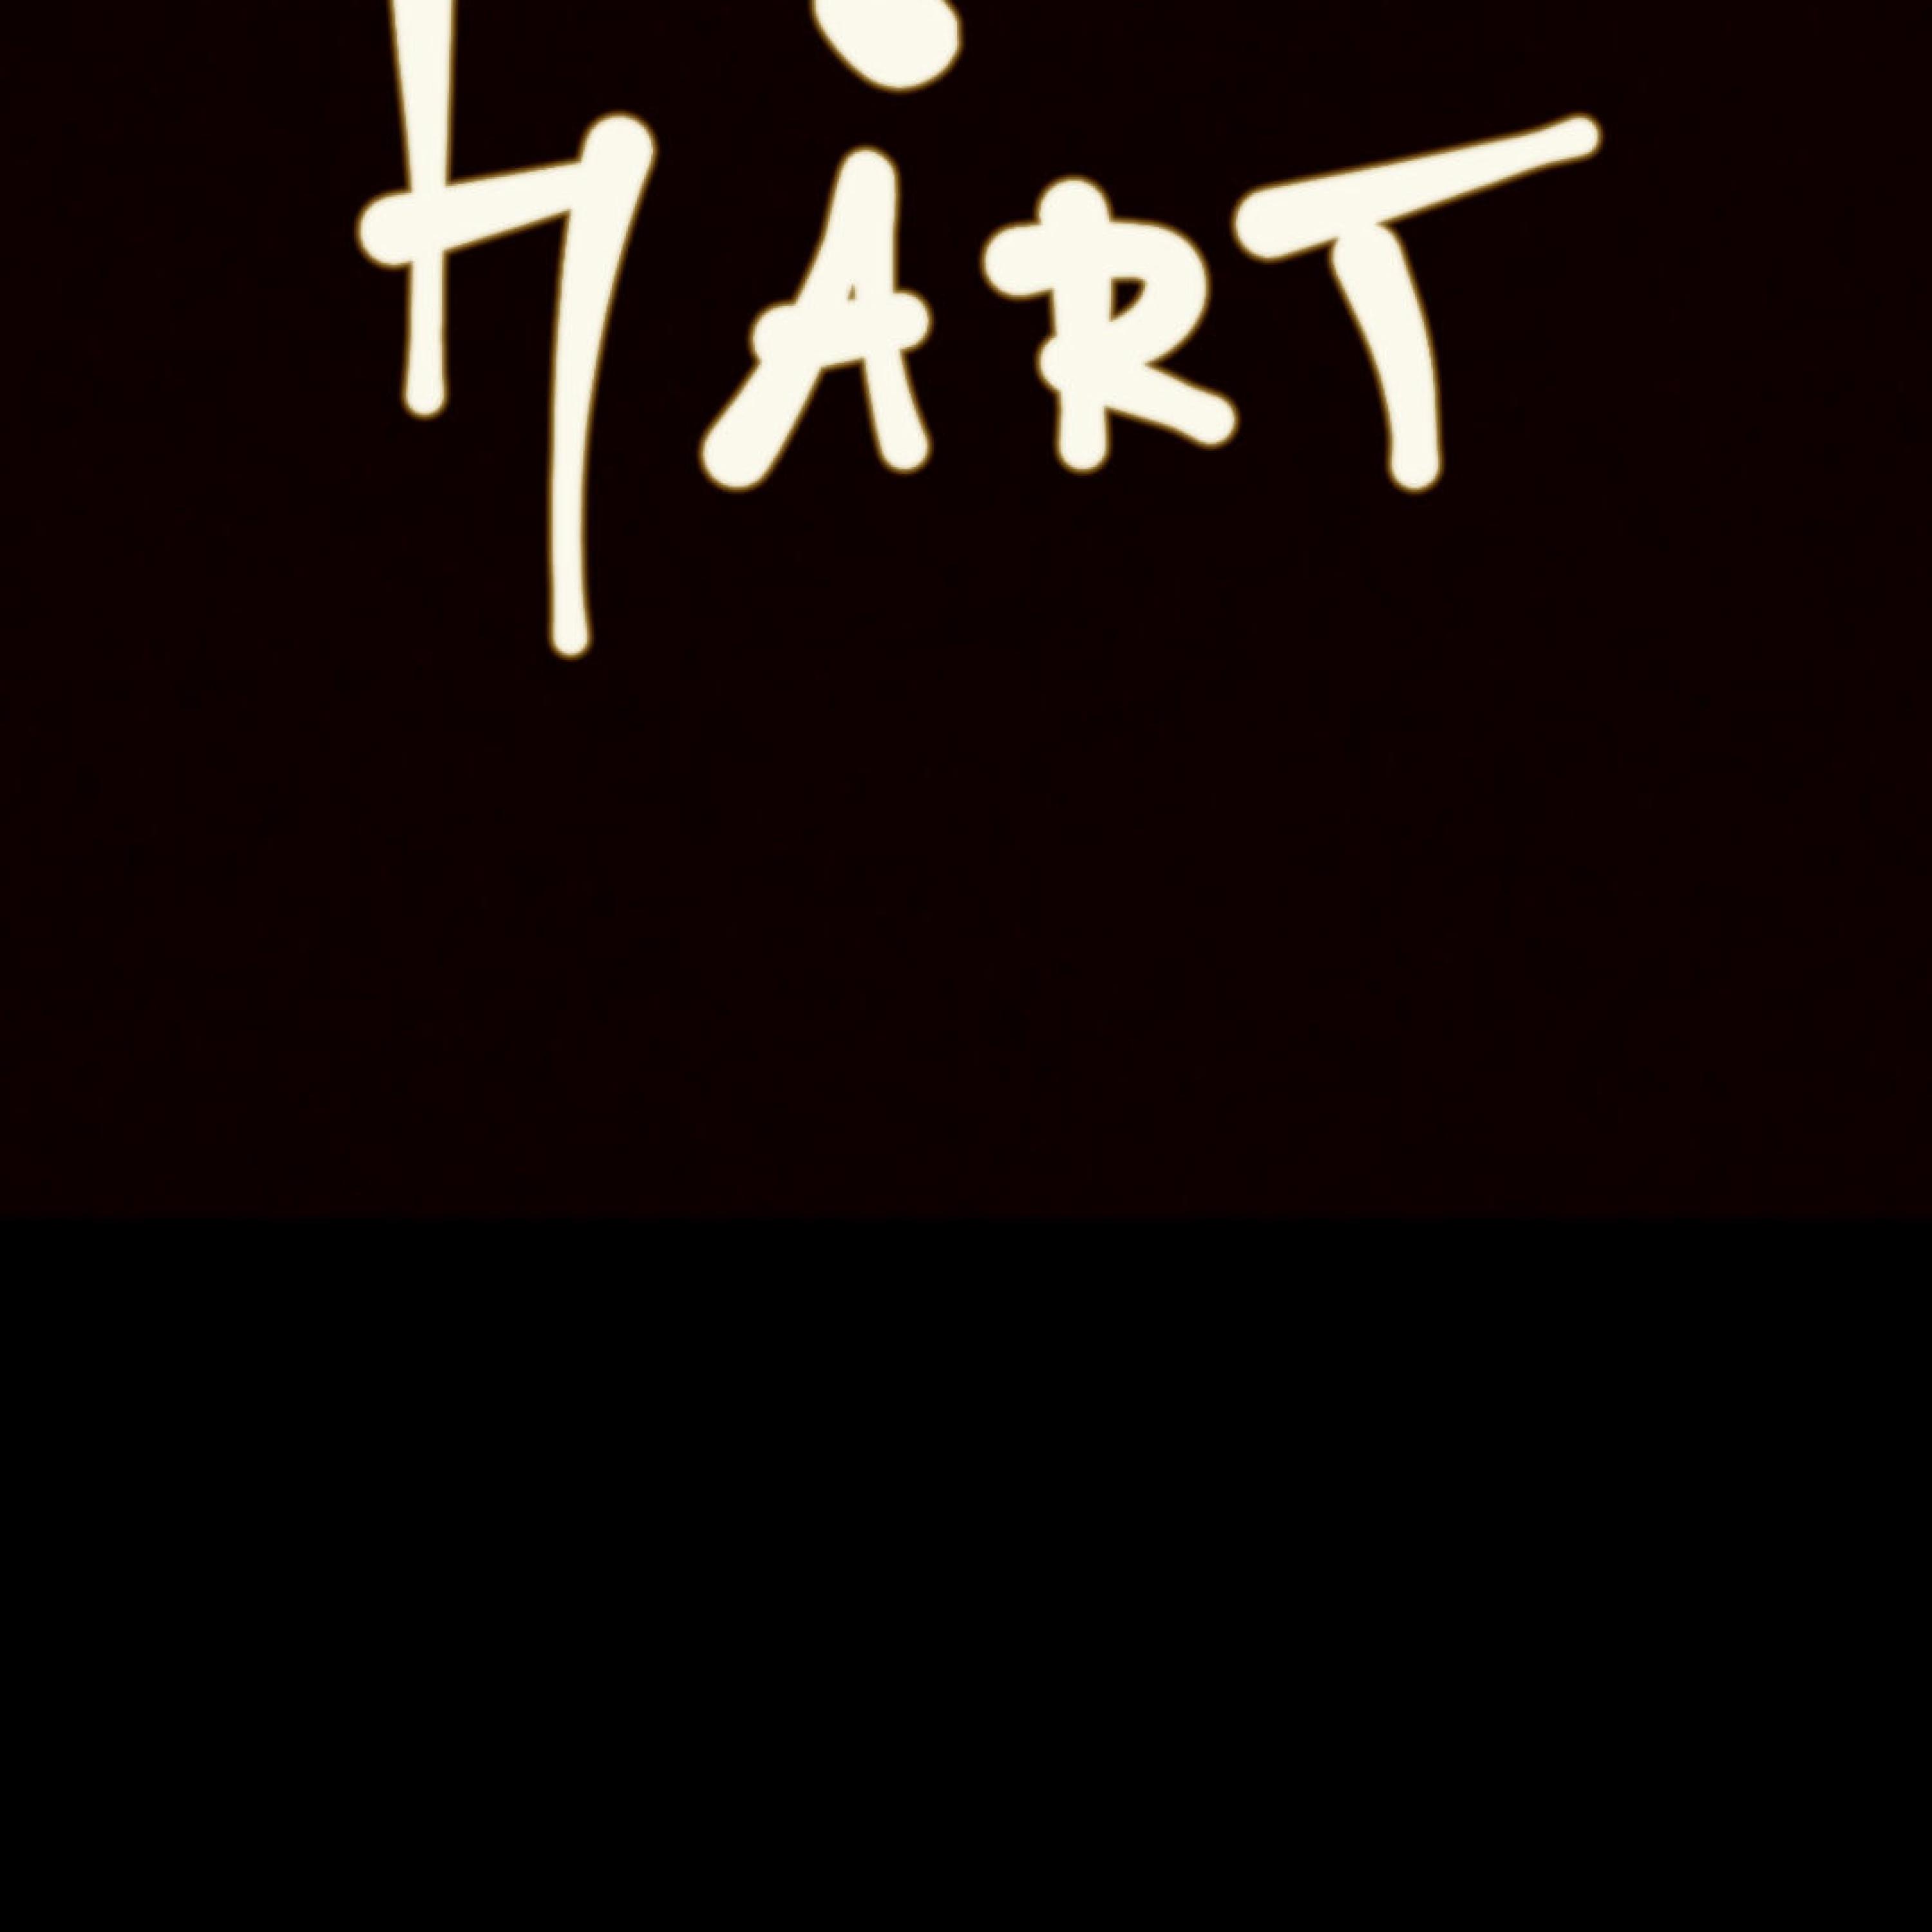 Hart - Many times (Demo)